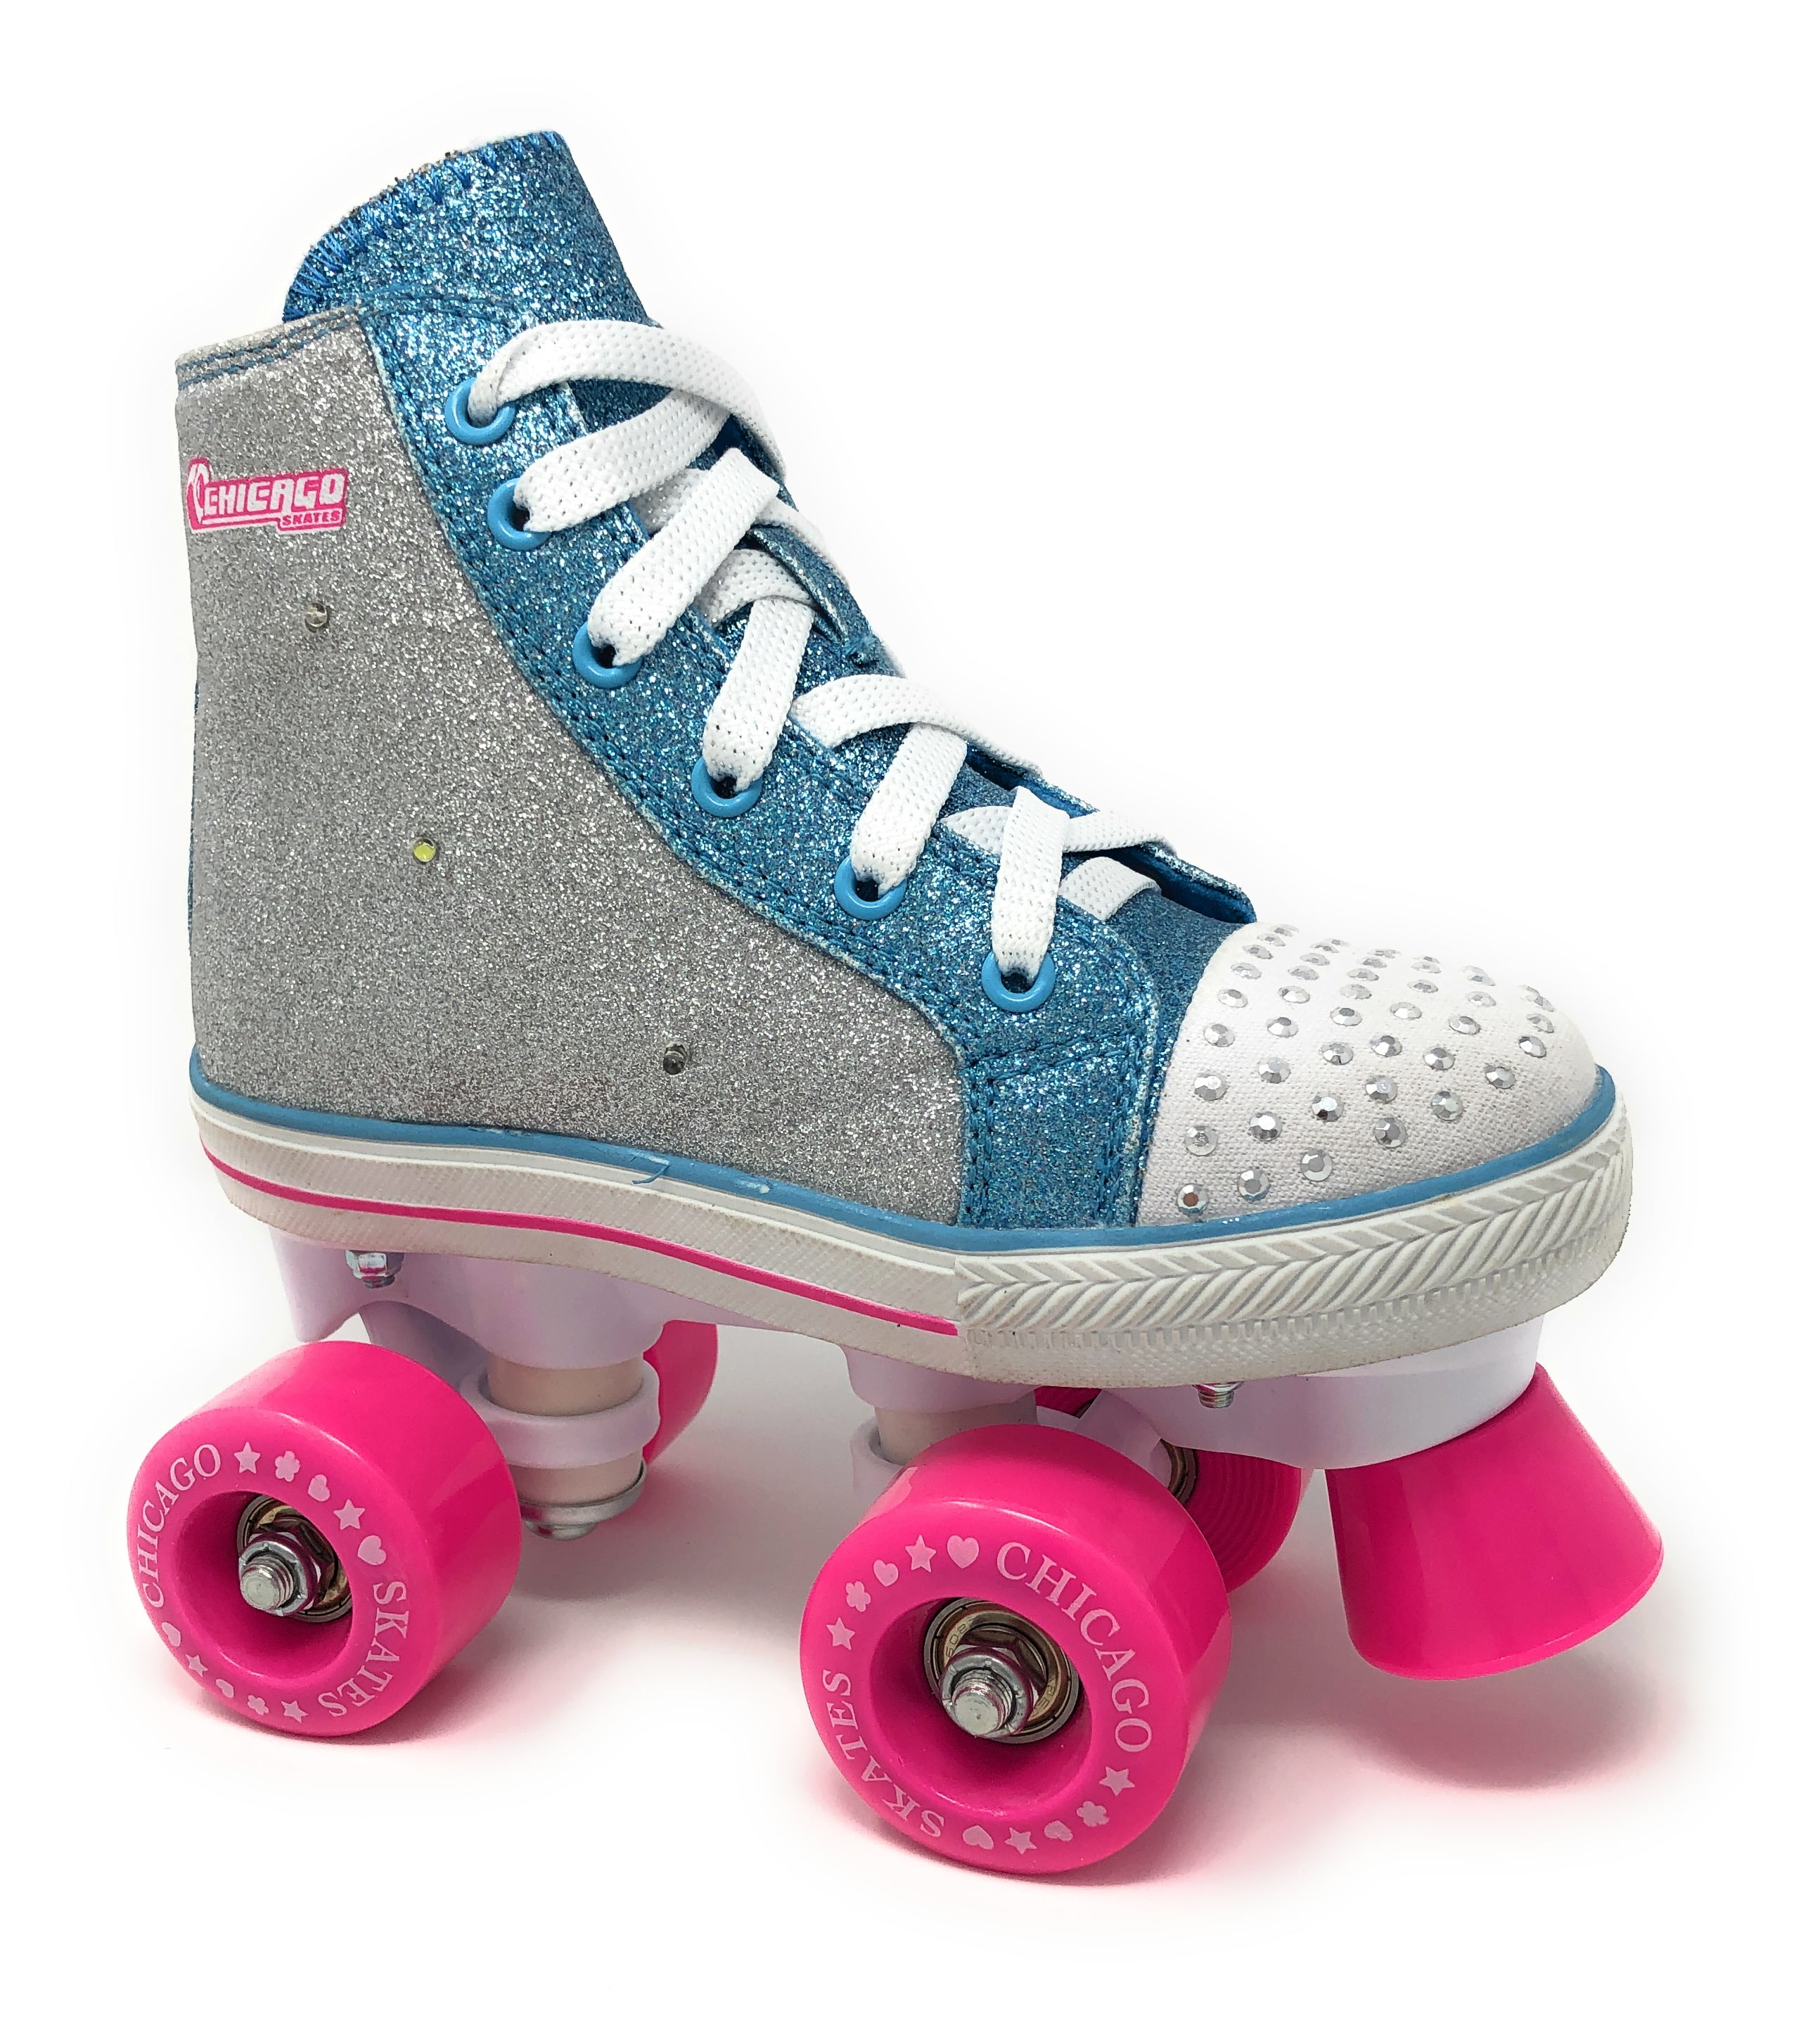 Aerowheels Quad Youth Adjustable Skates Size 1-4 Age 5 for sale online 